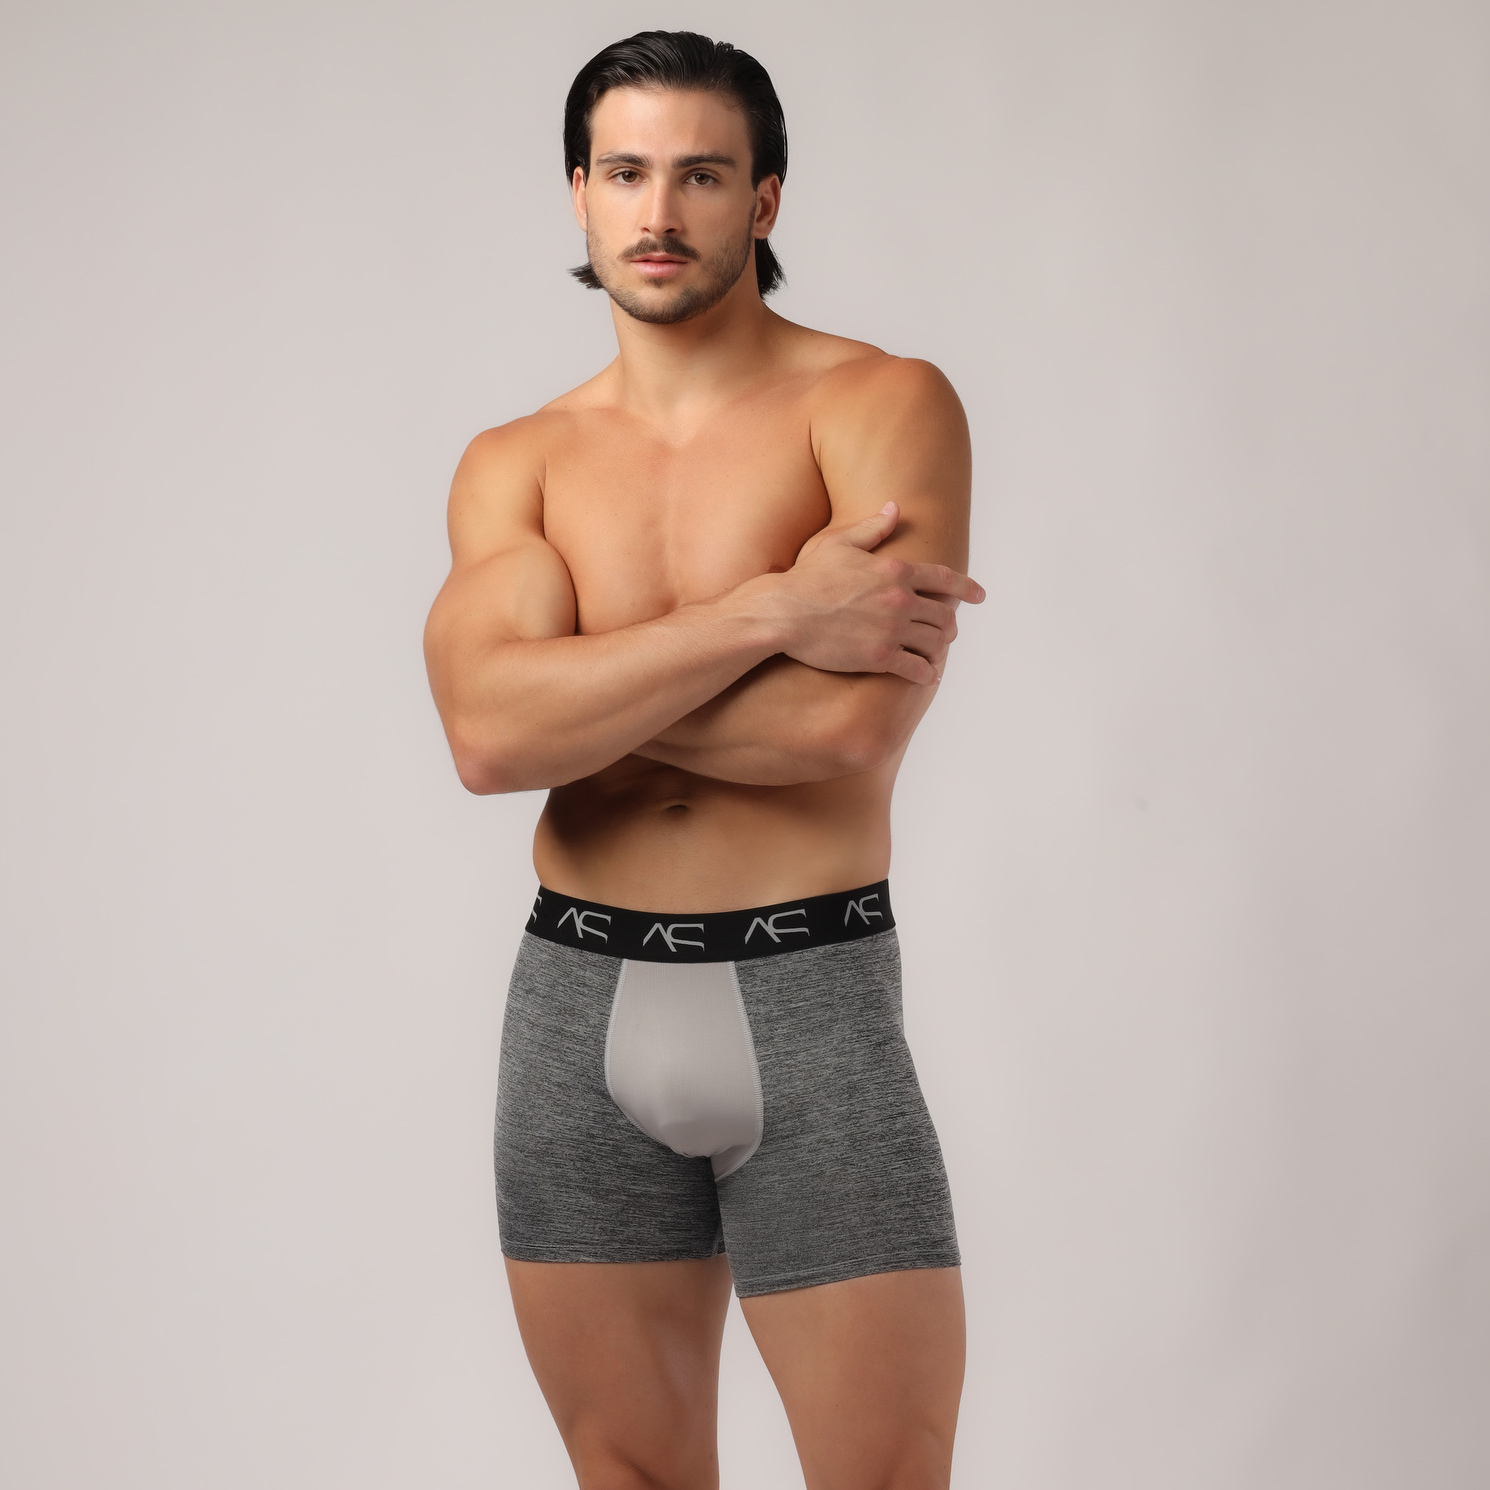 https://www.menandunderwear.com/wp-content/uploads/2020/10/Underwear-%E2%80%93-Sports-Collection-by-Adam-Smith-Wear-Mesh-Combo-Trunks-03.jpg